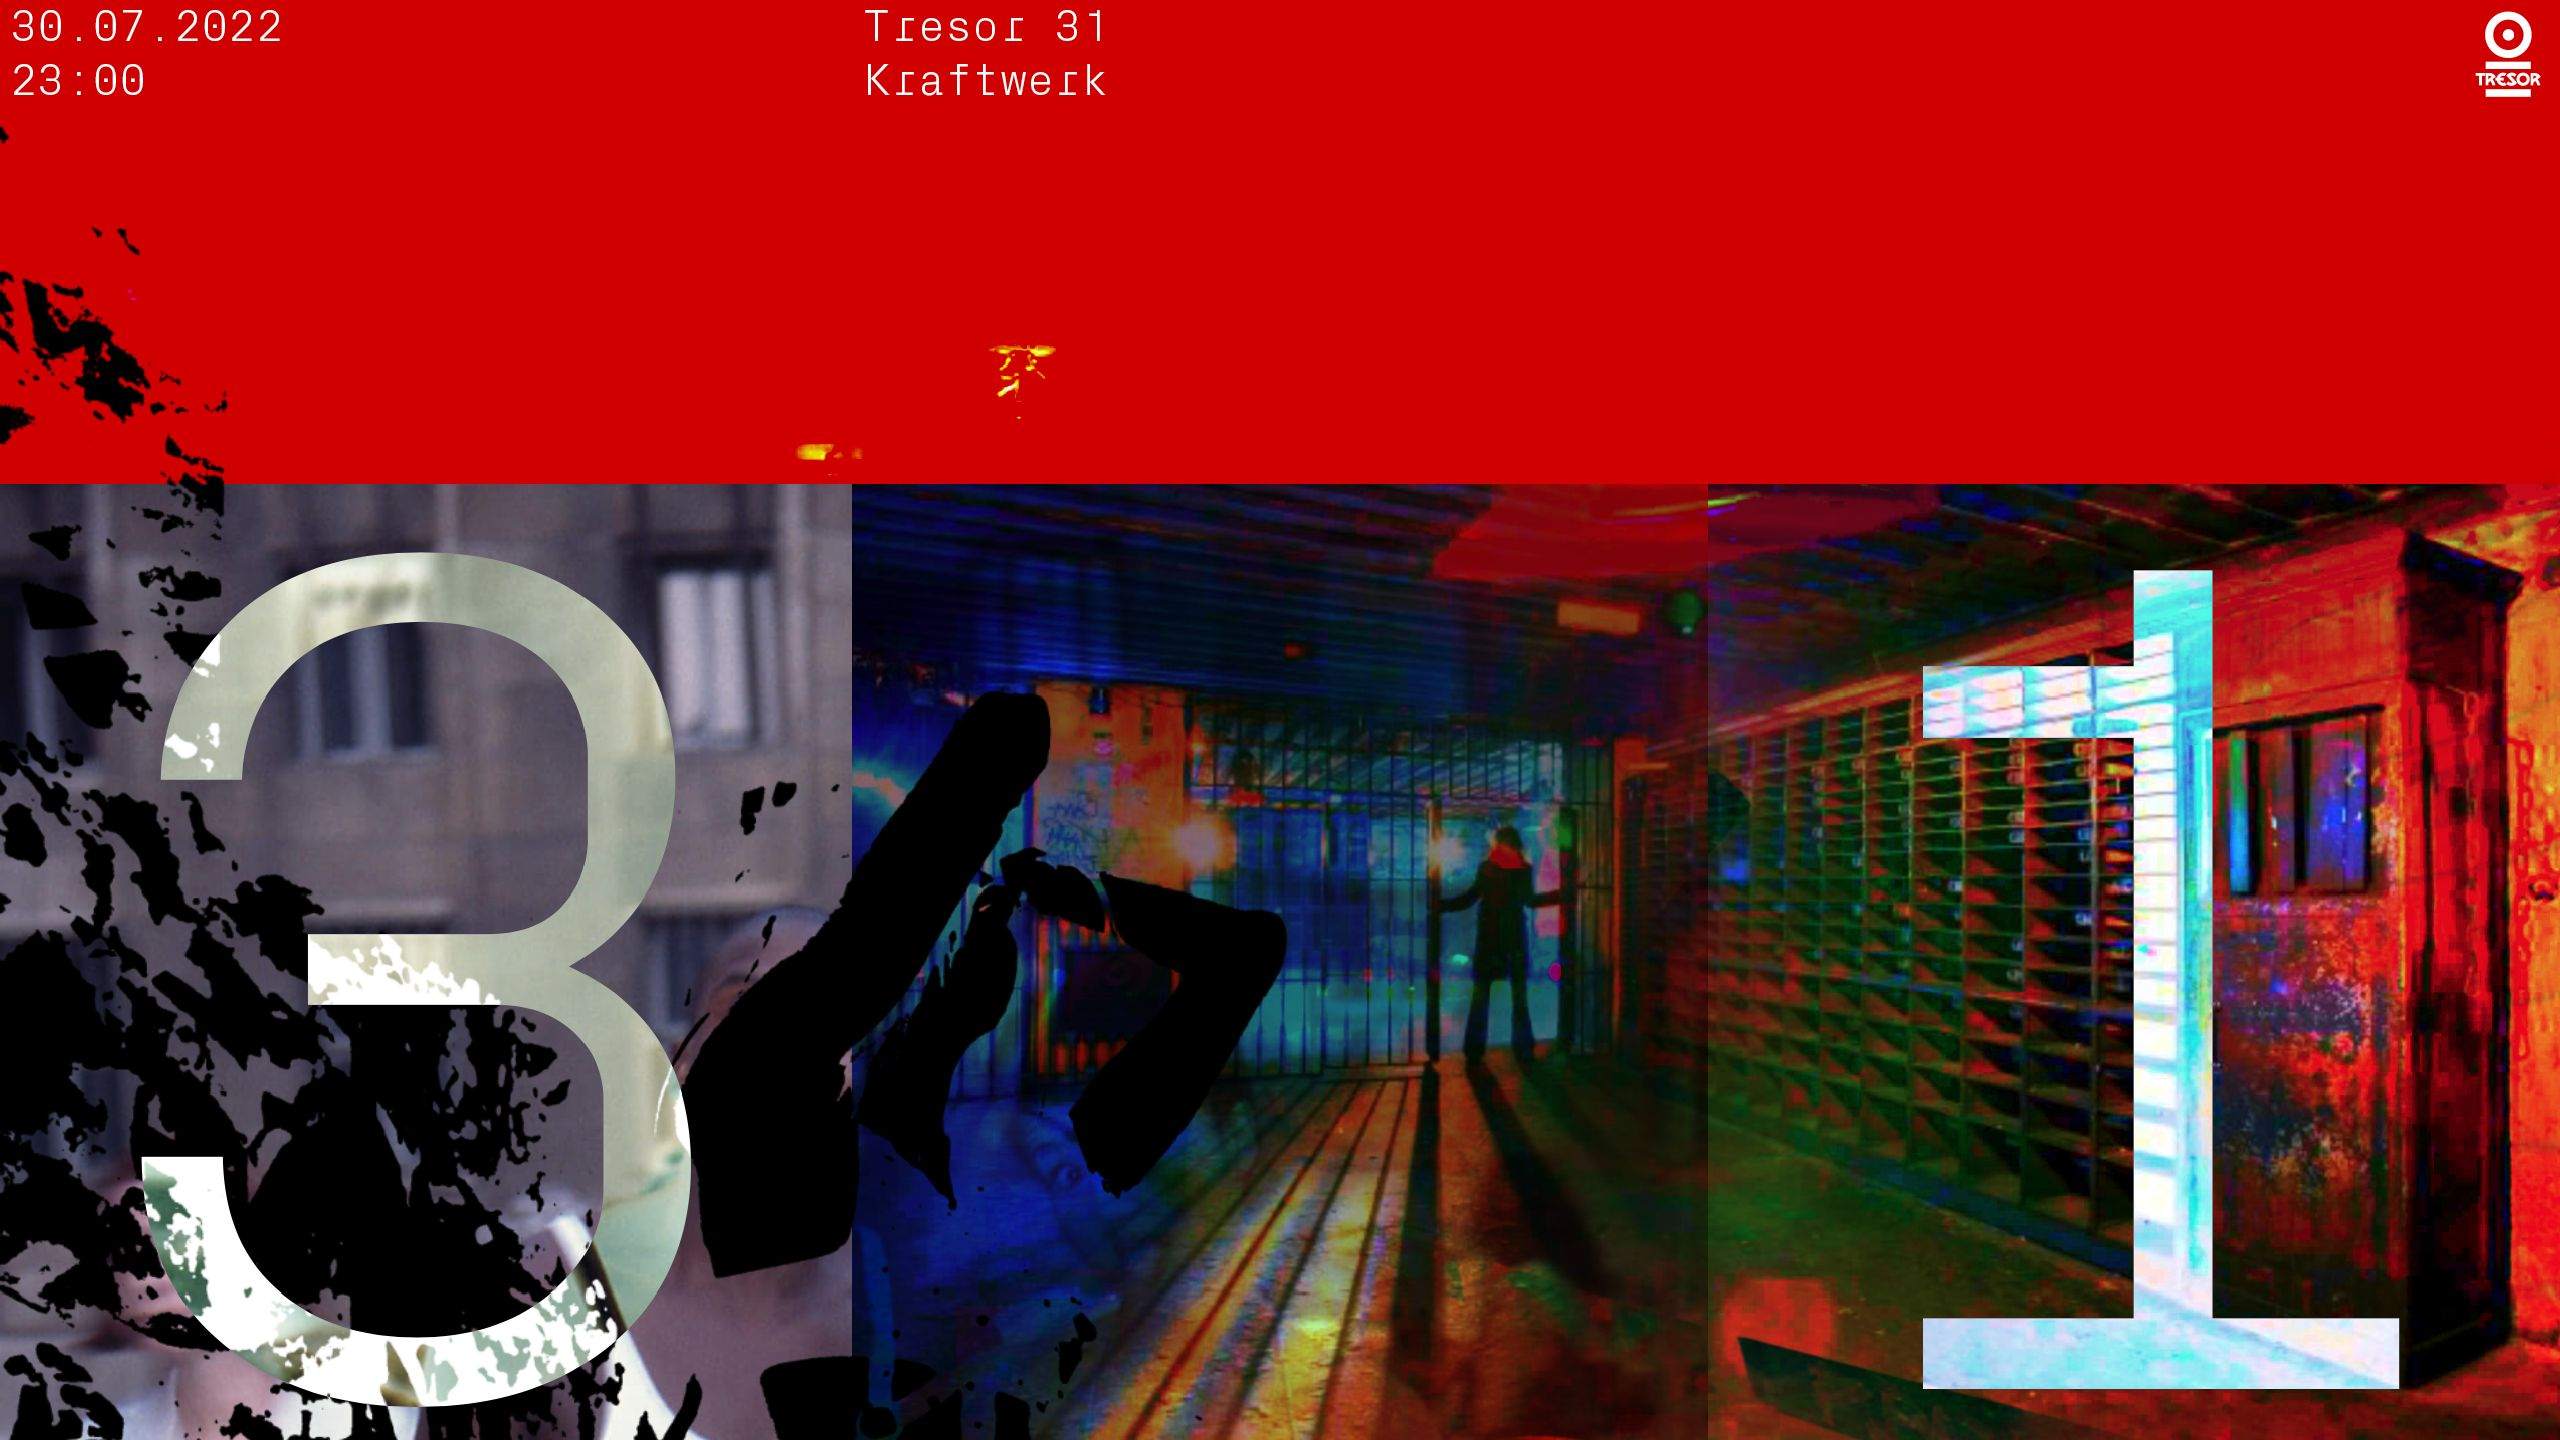 Tresor 31 Kraftwerk Klubnacht w/ Animistic Beliefs, Kangding Ray, Logic1000, Samuel Kerridge - フライヤー表